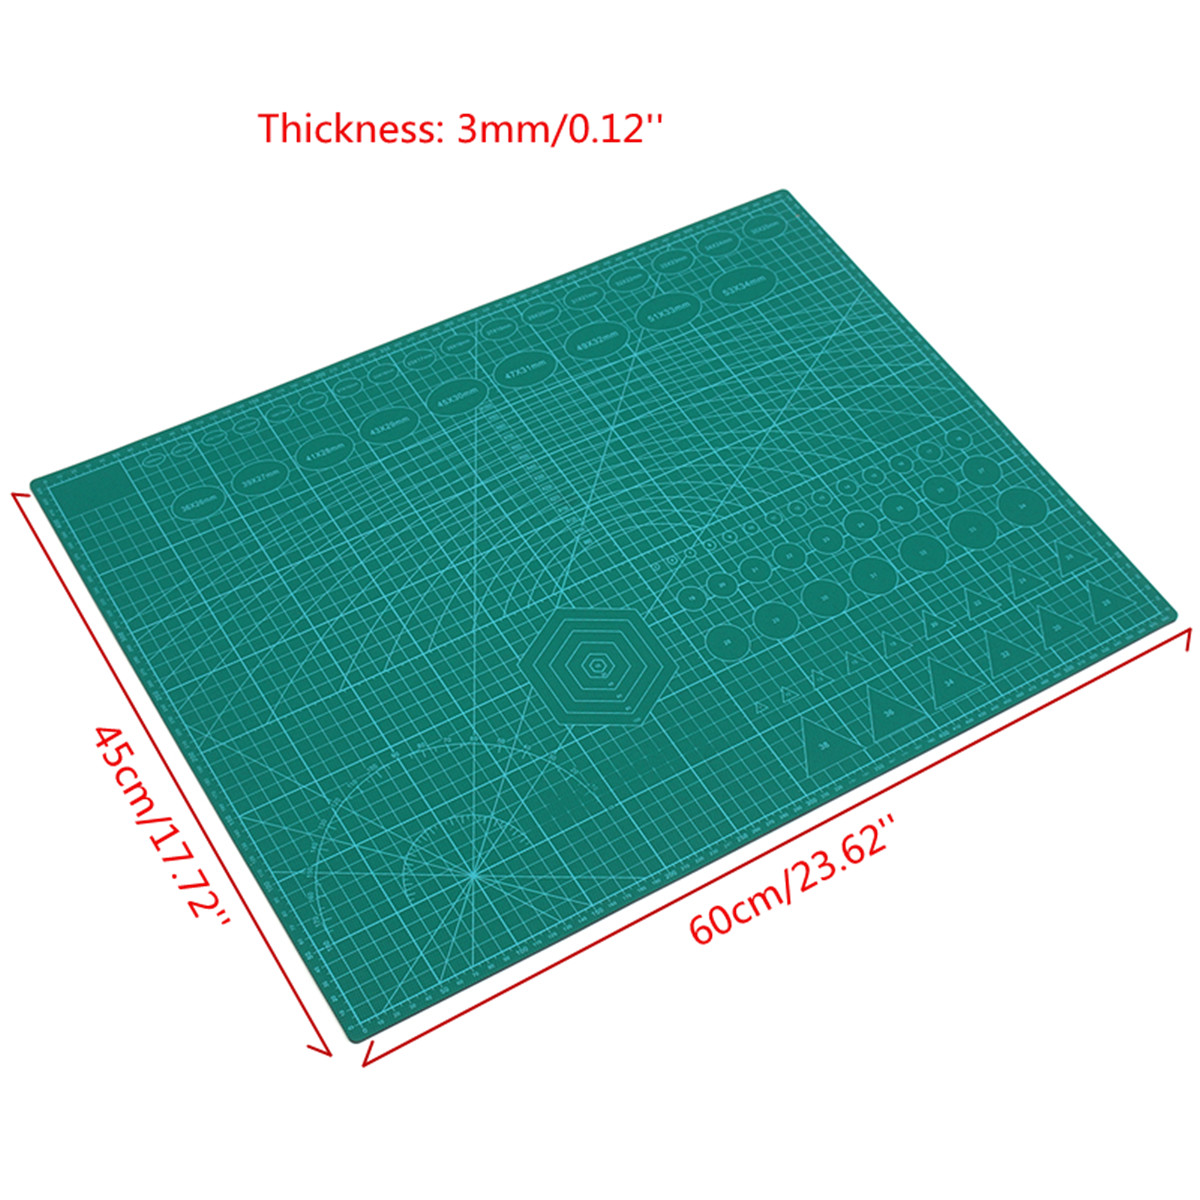 PVC Self Healing Cutting Mat Craft Quilting Grid Lines Printed Board A2 A3 A4 A5